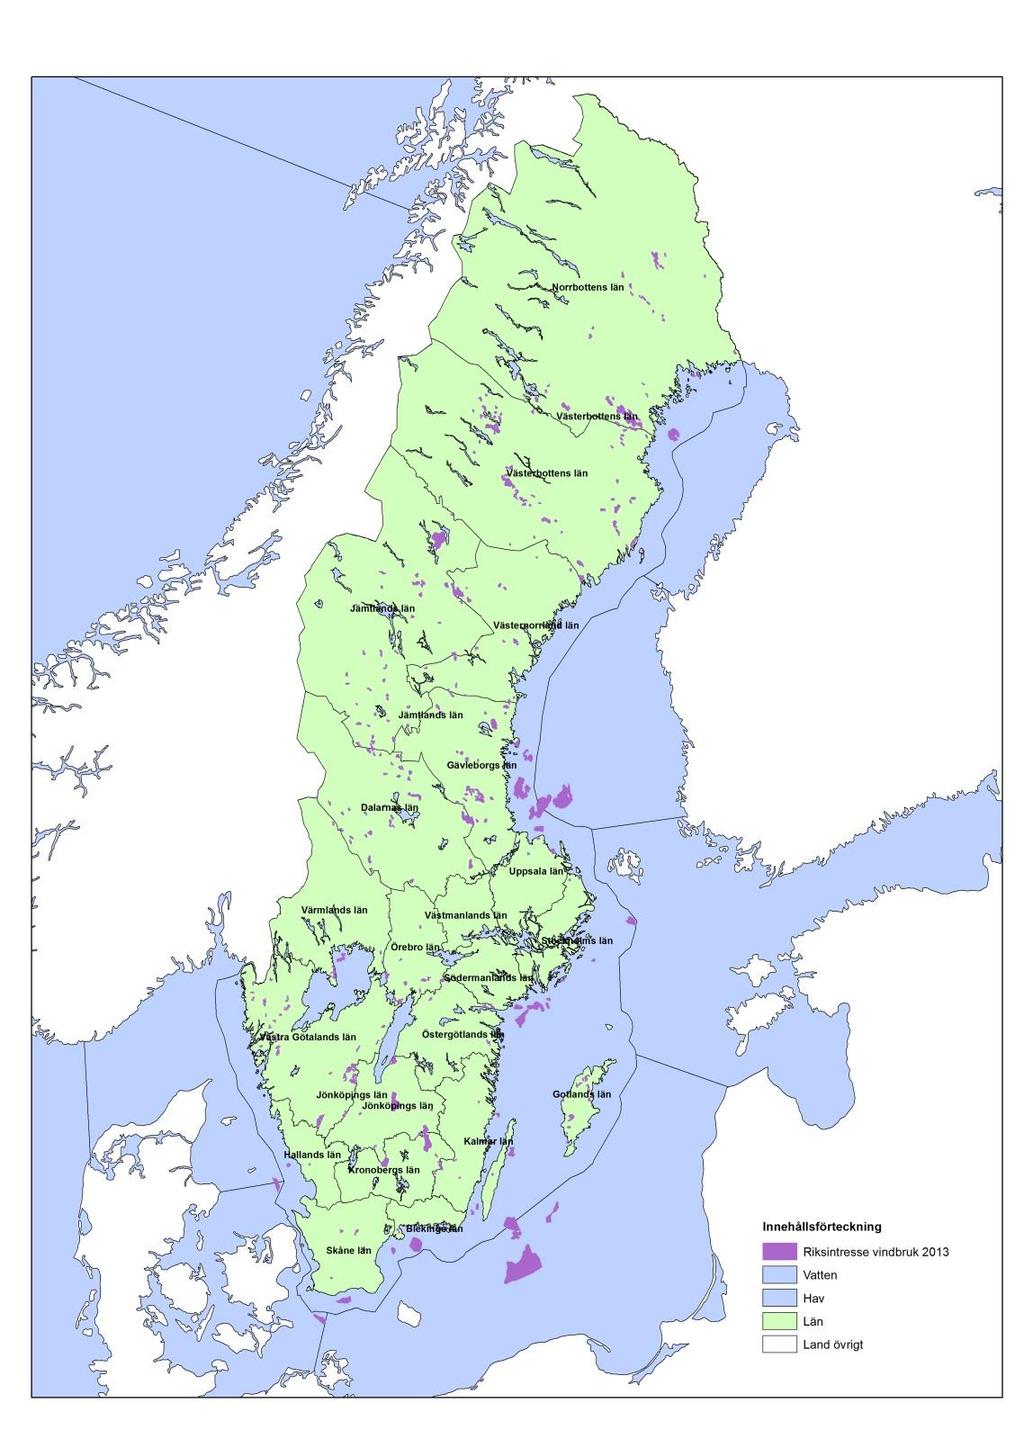 Riksintresse vindbruk 2013 2013-12-18 281 områden på land (3 783 km2) 29 områden till havs (4 085 km2) Ytanspråk 7 868 km2 Totalt 310 områden 1,5 procent av Sveriges yta Antal